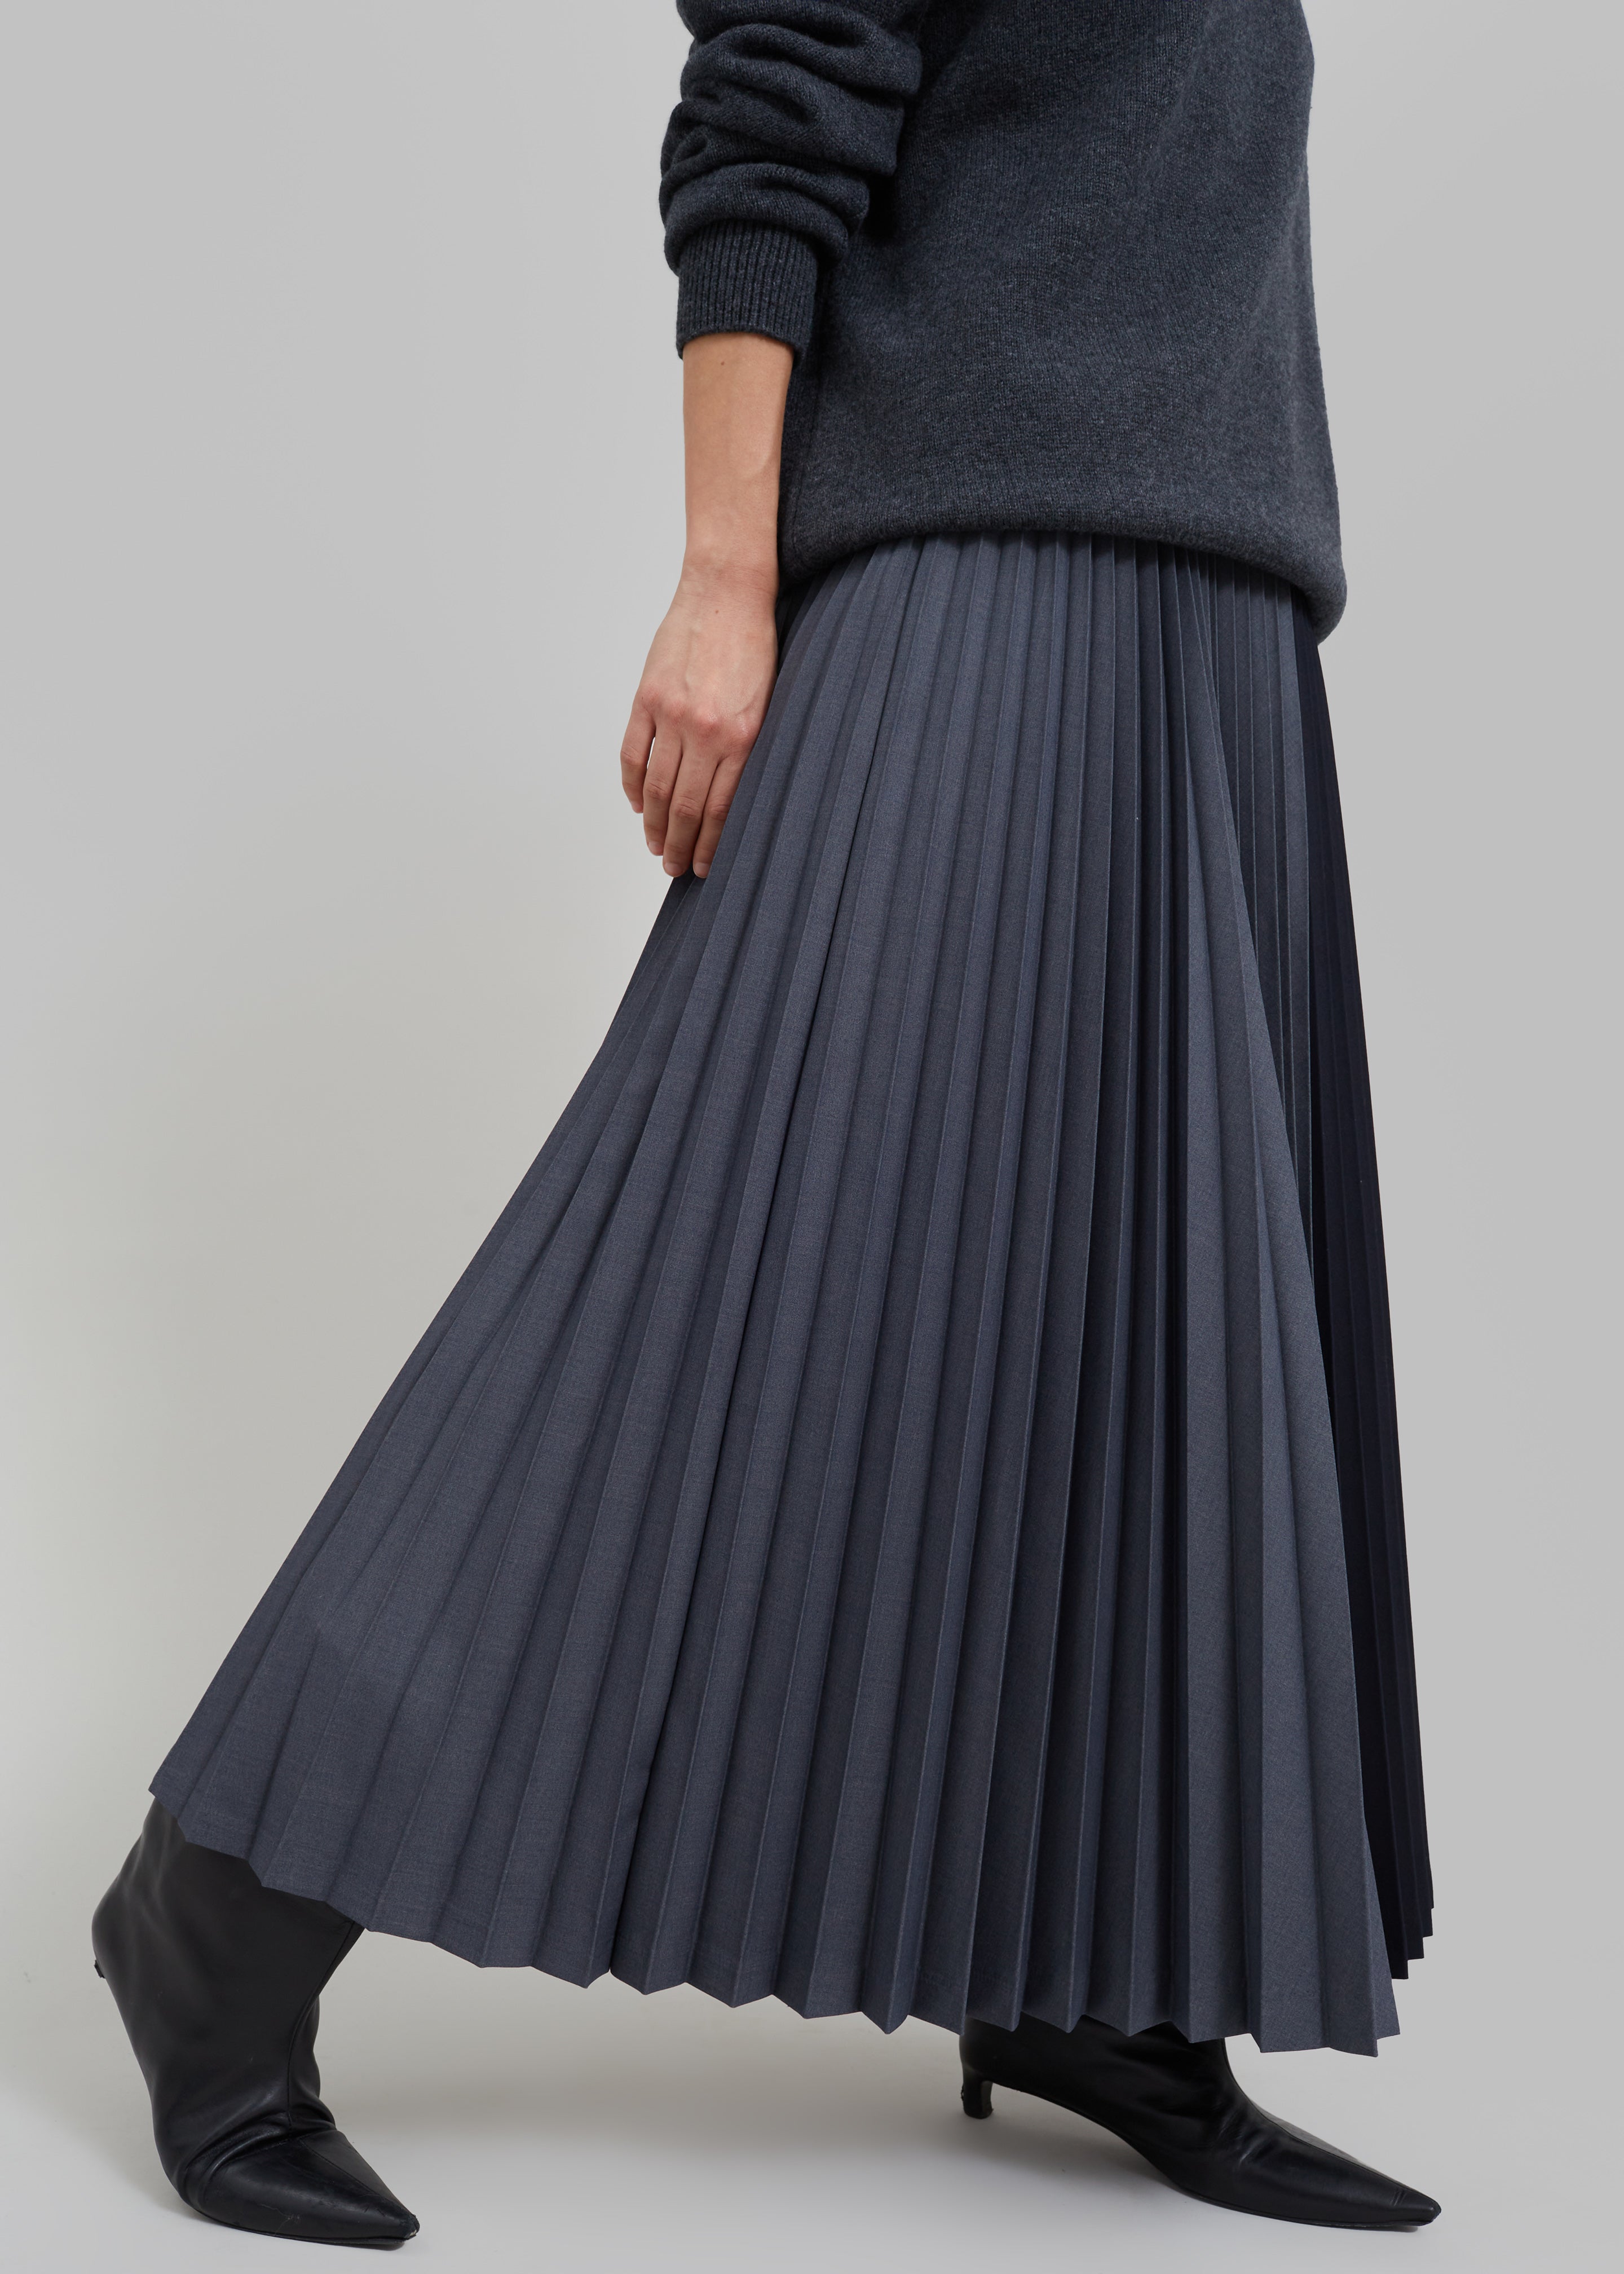 Orem Pleated Skirt - Charcoal - 3